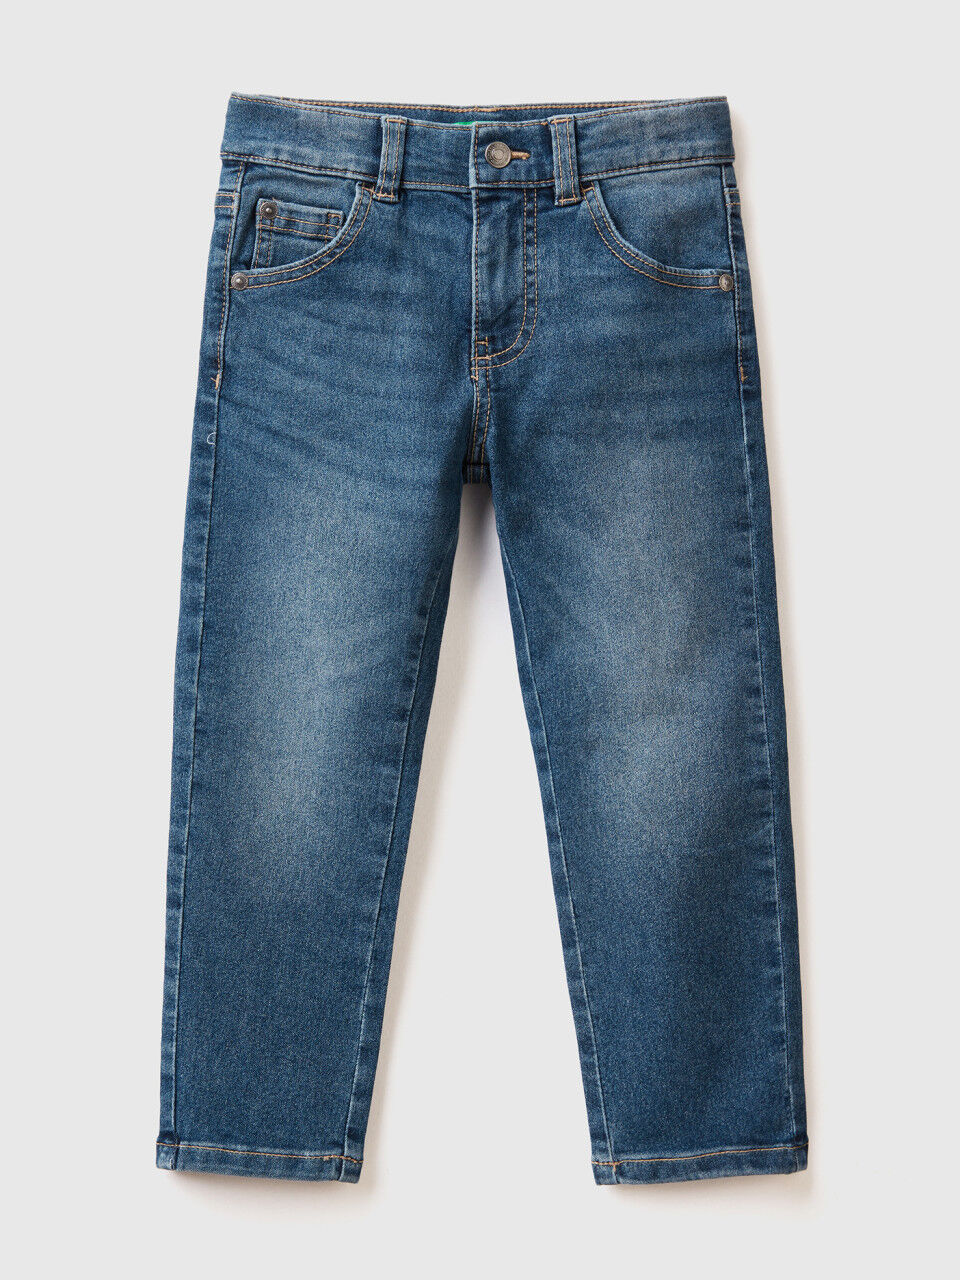 Jeans & Denim: Collection | Benetton